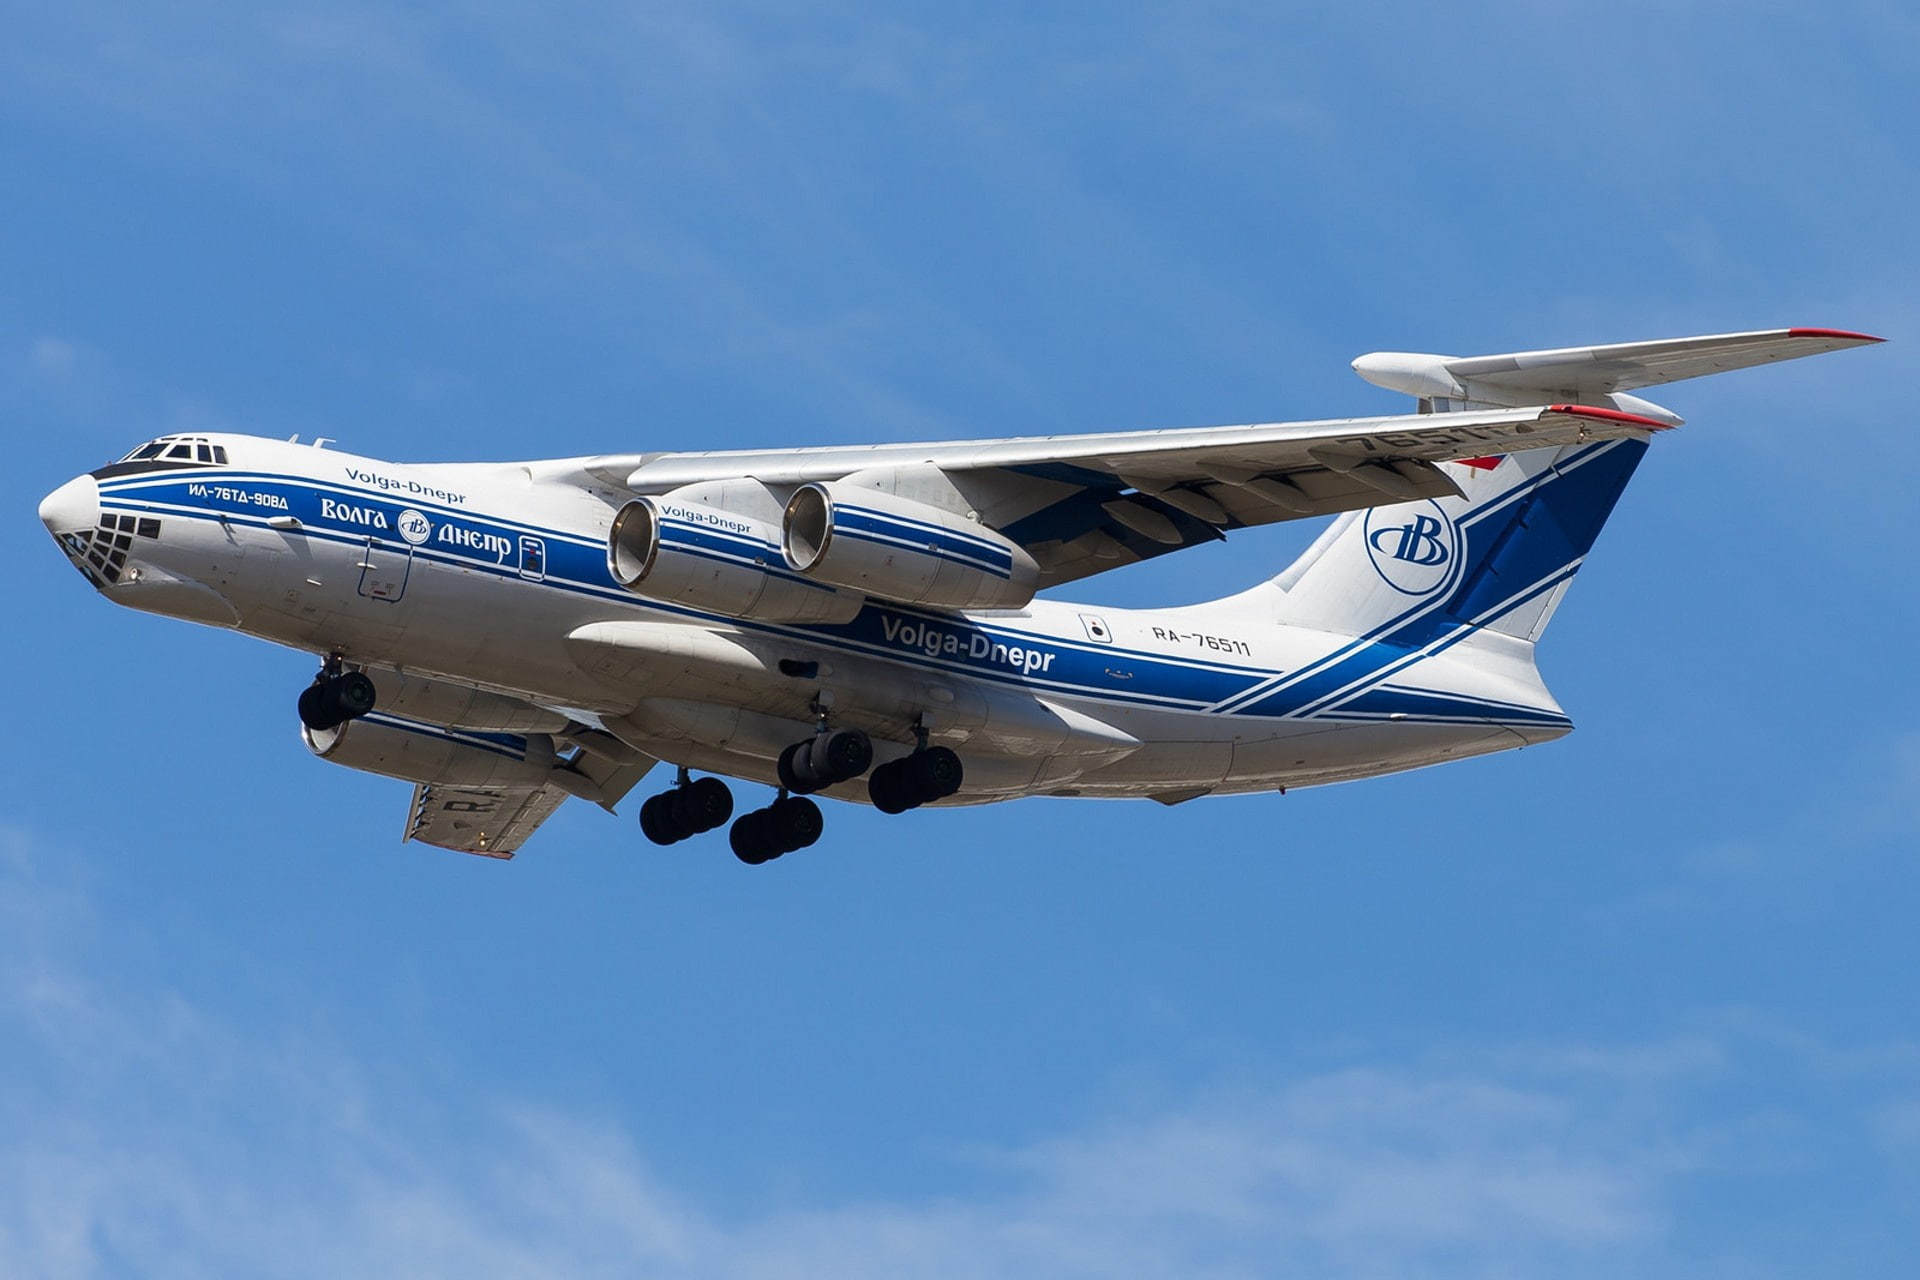 the sky, the plane, The Il-76